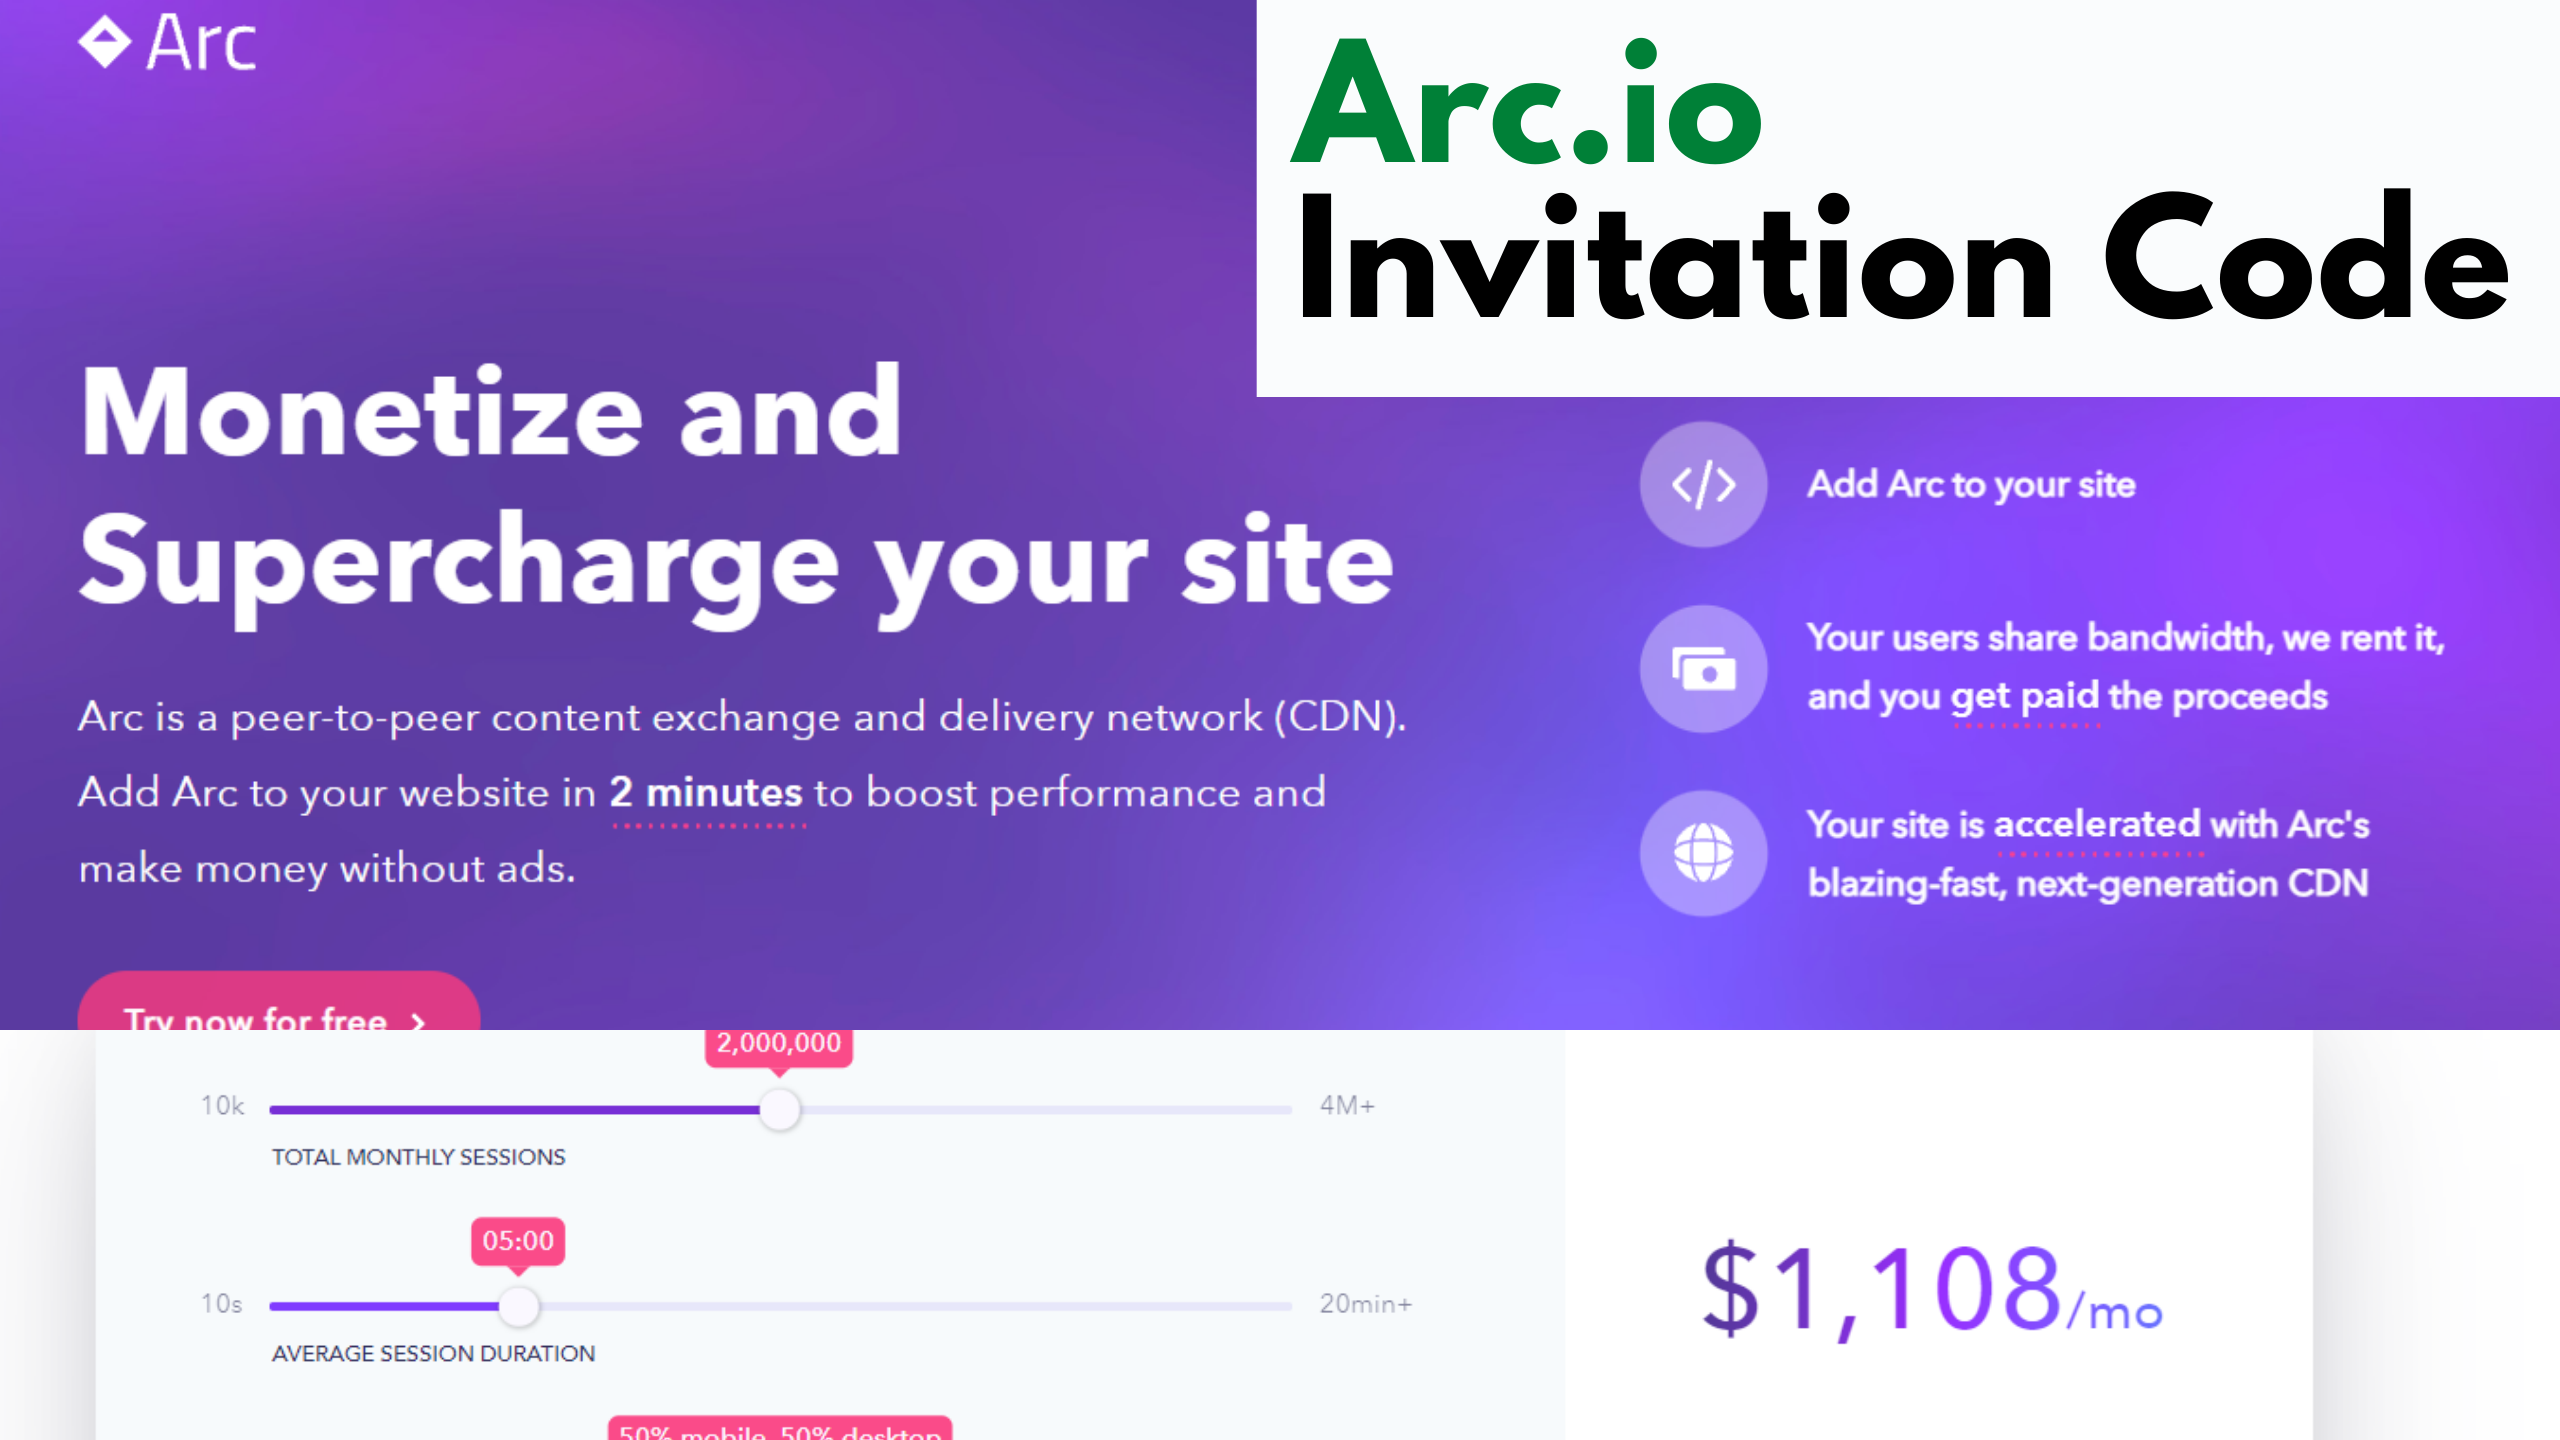 Arc.io Invitation Code | Buying Arc.io Invitation Code | Buy Arc.io Account